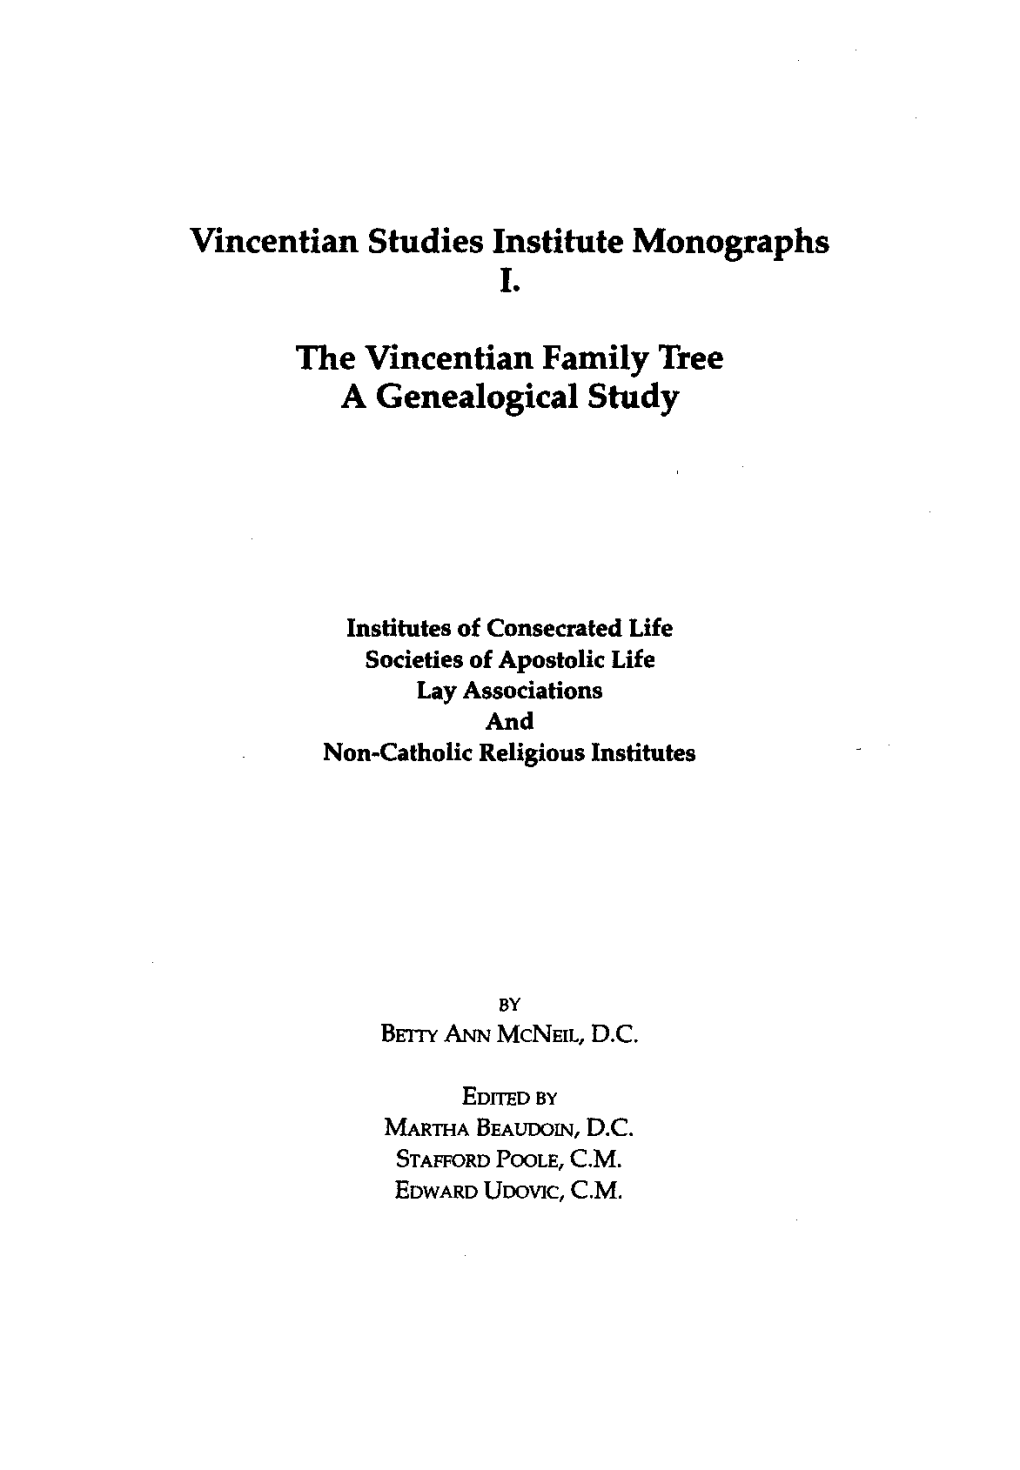 Vincentian Studies Institute Monographs the Vincentian Family